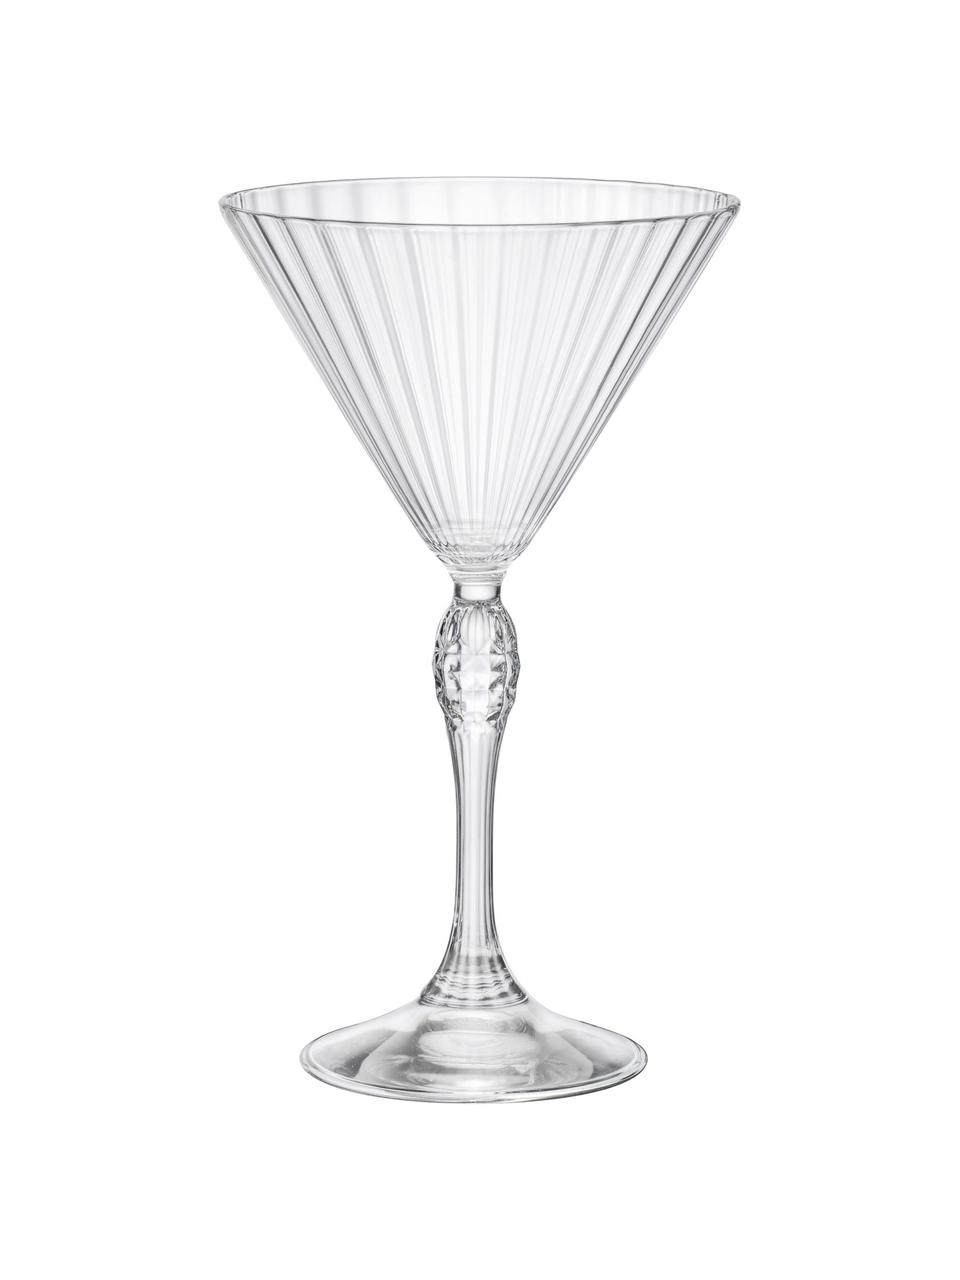 Martini glazen America's Cocktail met groefstructuur, 4 stuks, Glas, Transparant, Ø 10 cm x H 19 cm, 240 ml